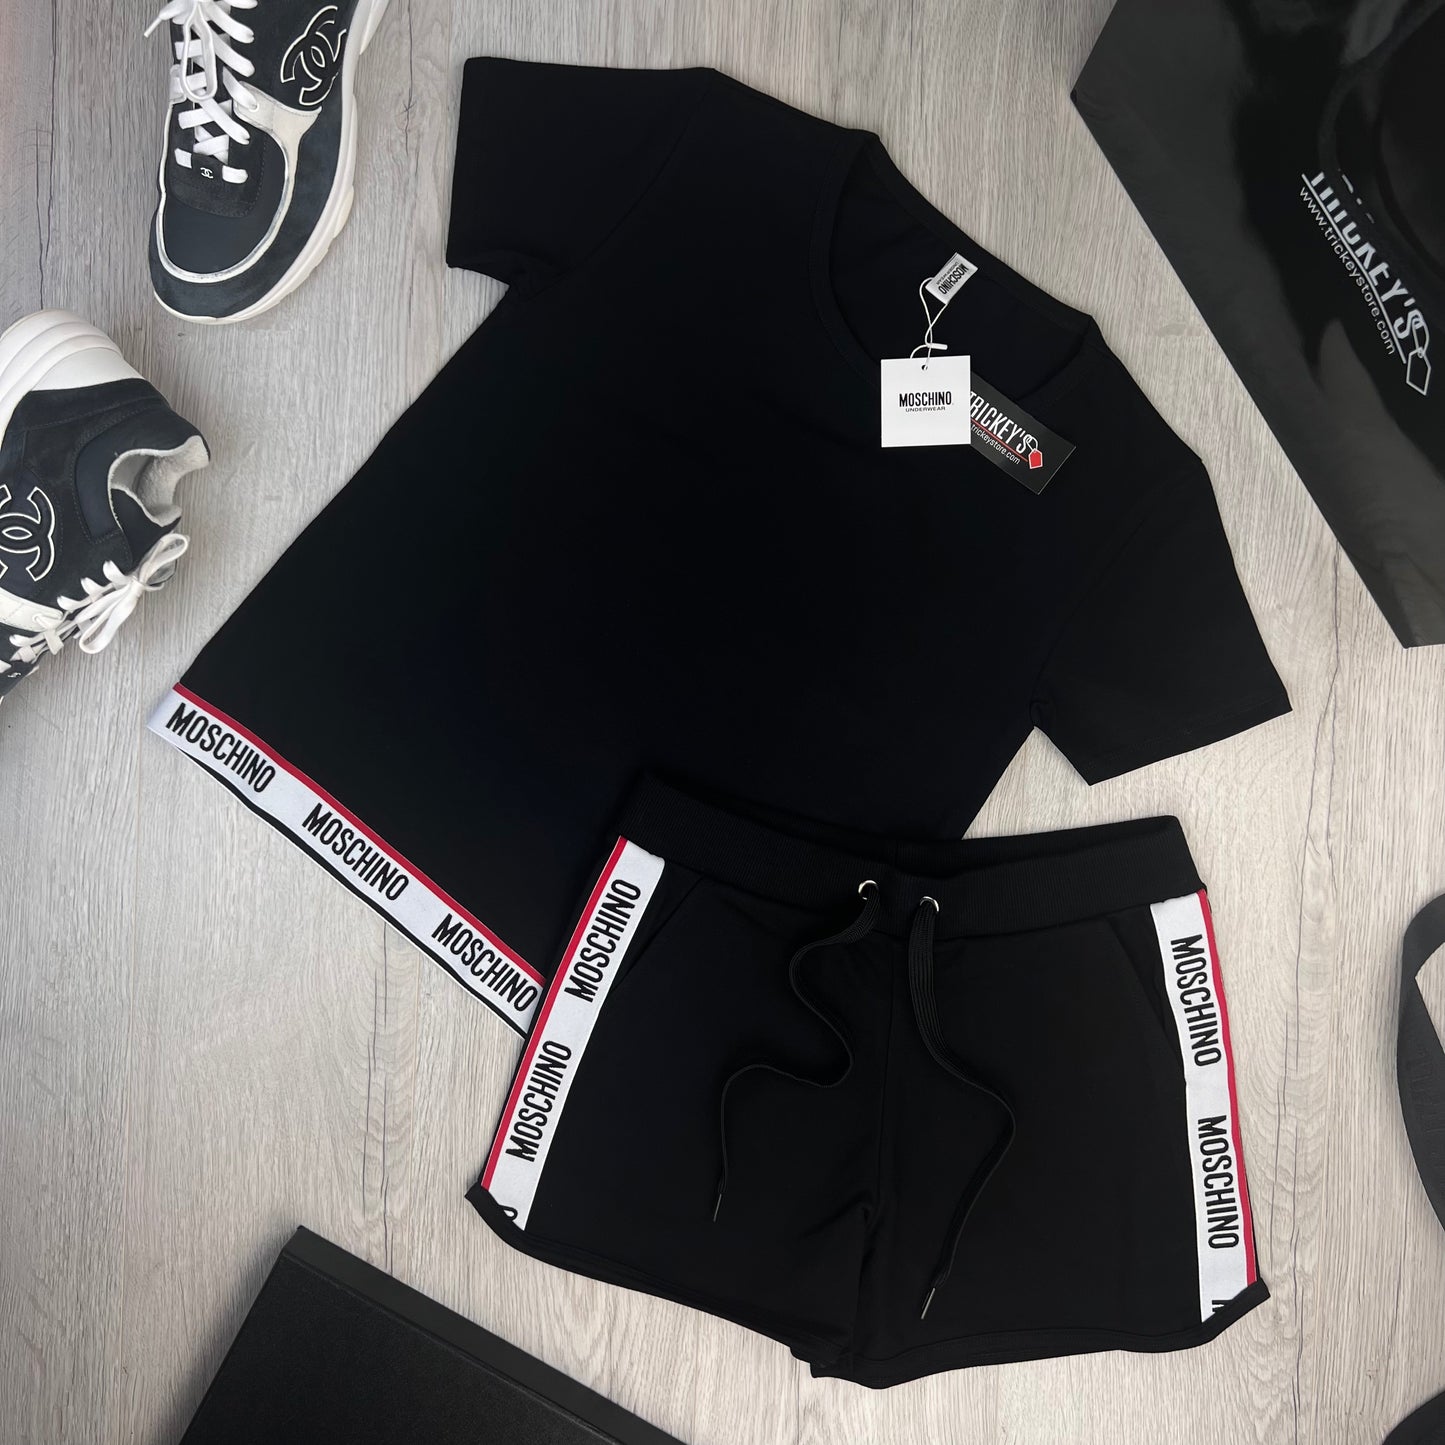 Moschino Women’s Black Gym Cotten Shorts